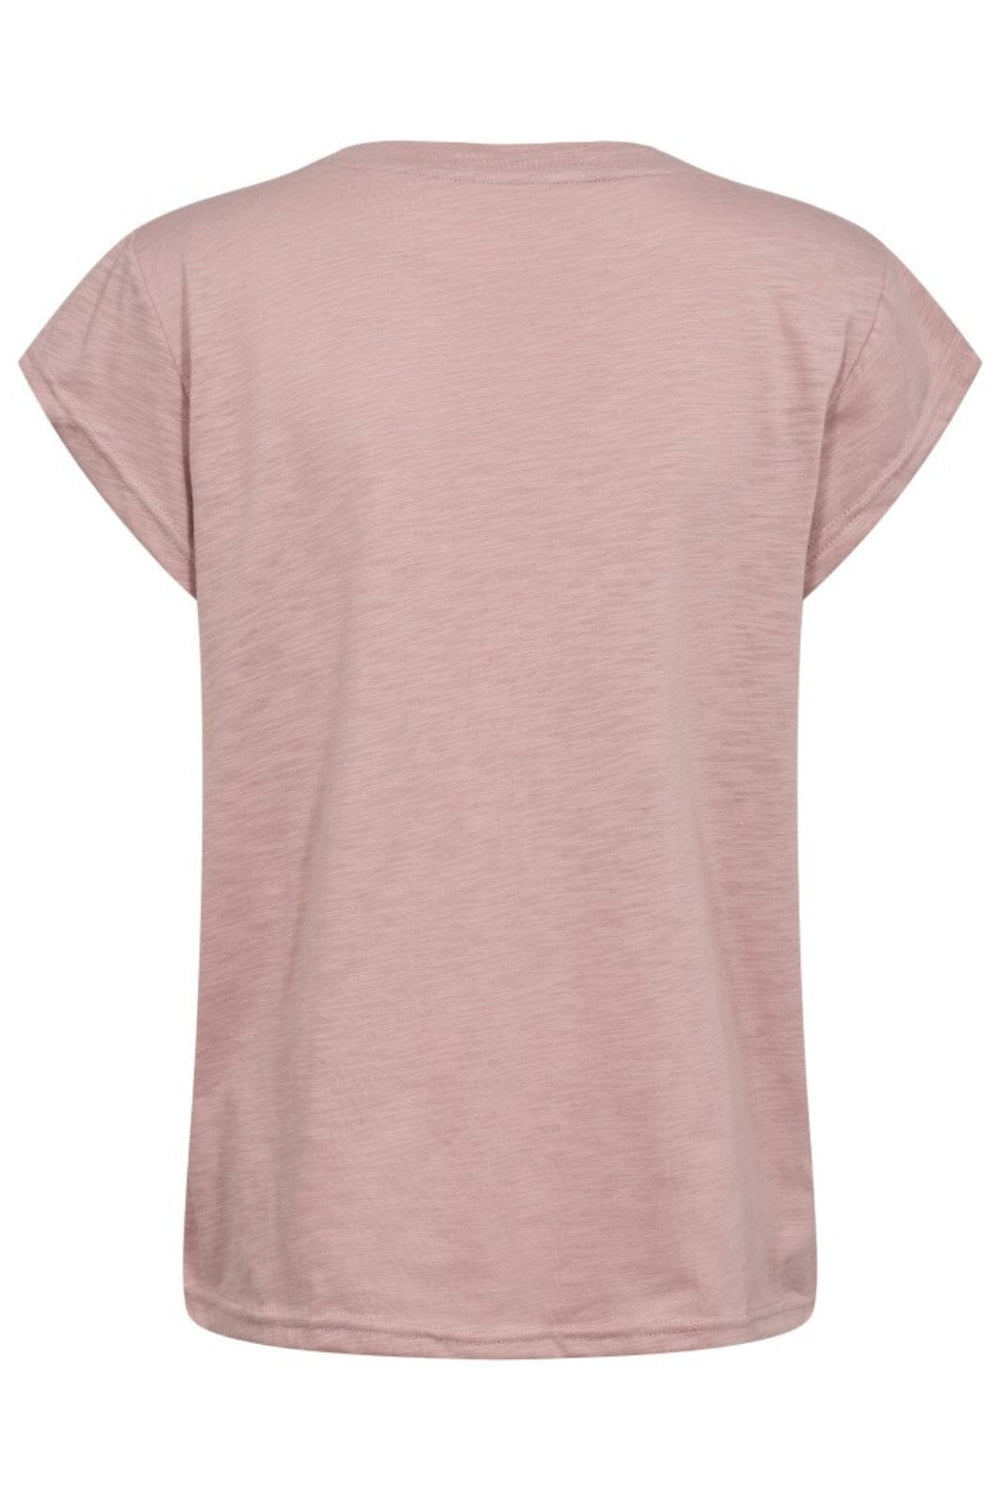 Forudbestilling - Liberte - Ulla-Tshirt - Dusty Rose - (Slut April) T-shirts 